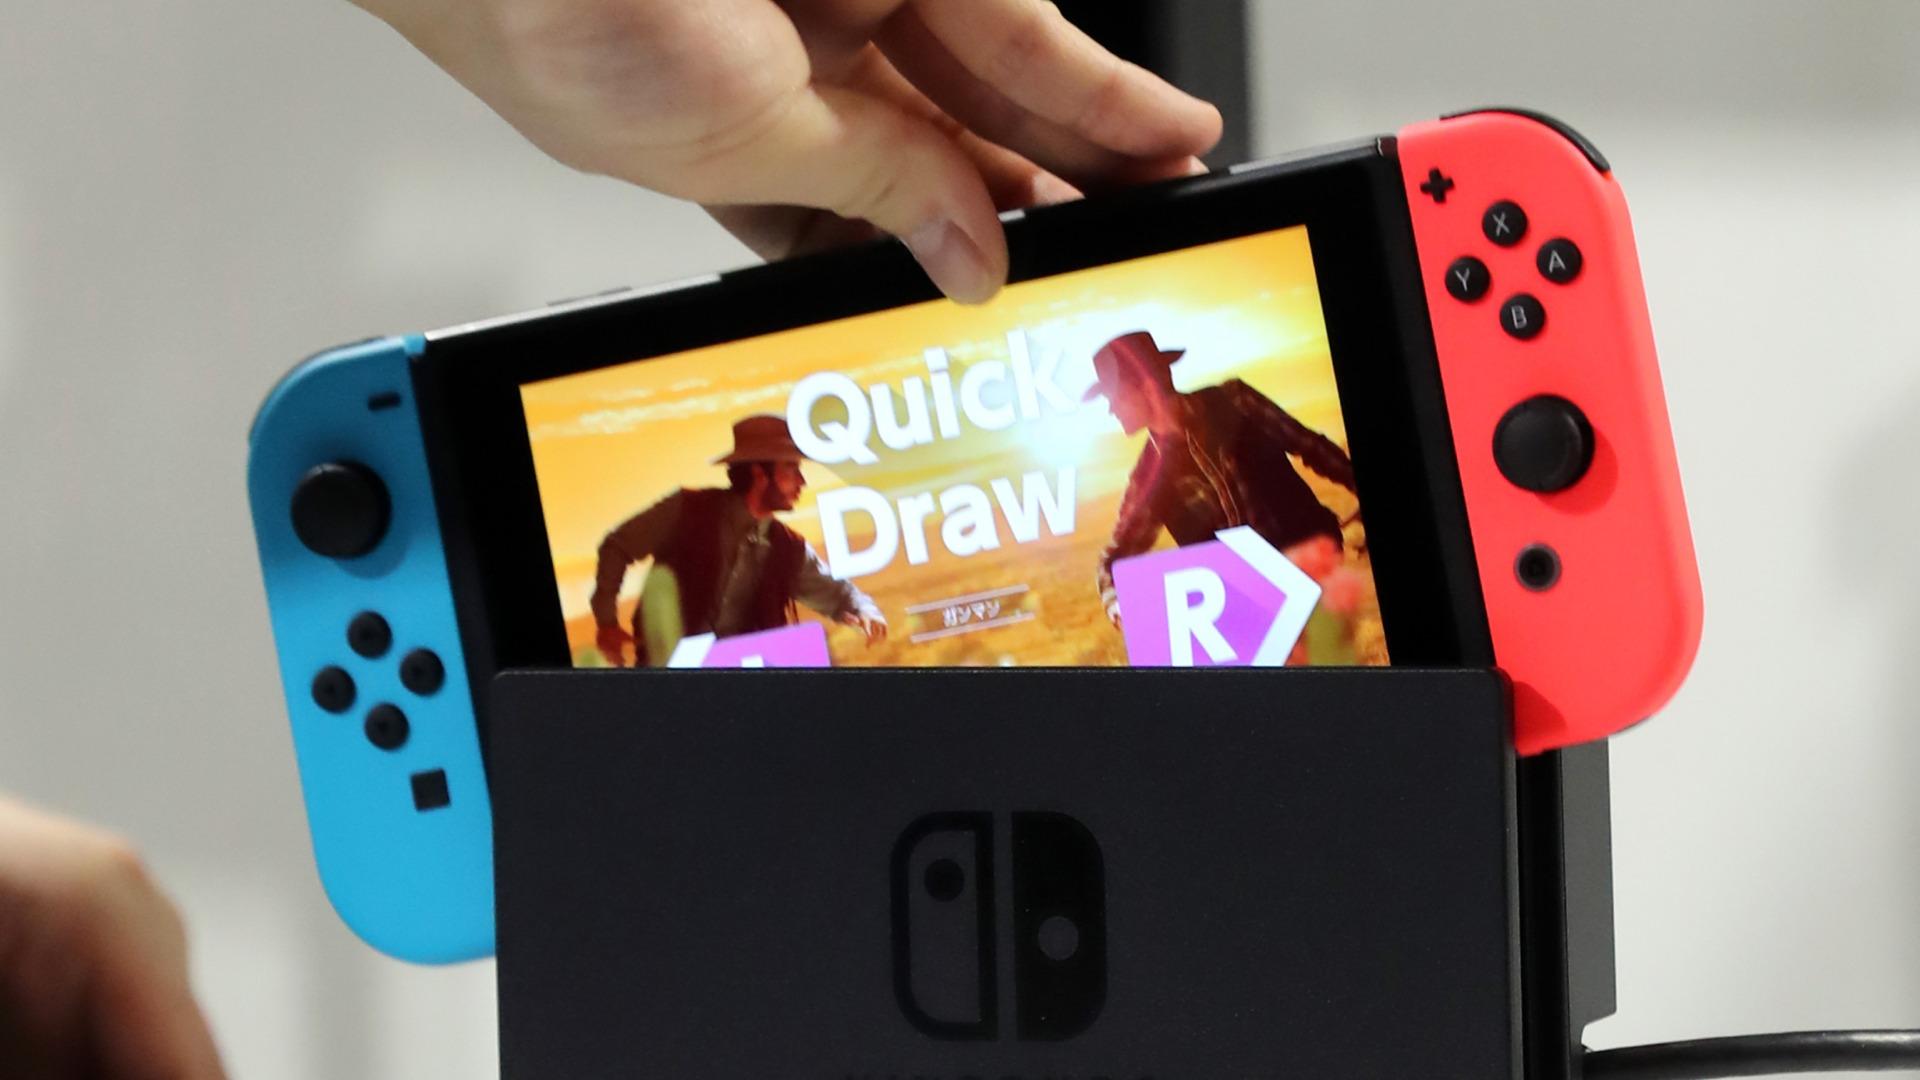 Nintendo Switch2(仮)、6月に発表？初代と同じ3月に発売かも（多根清史 